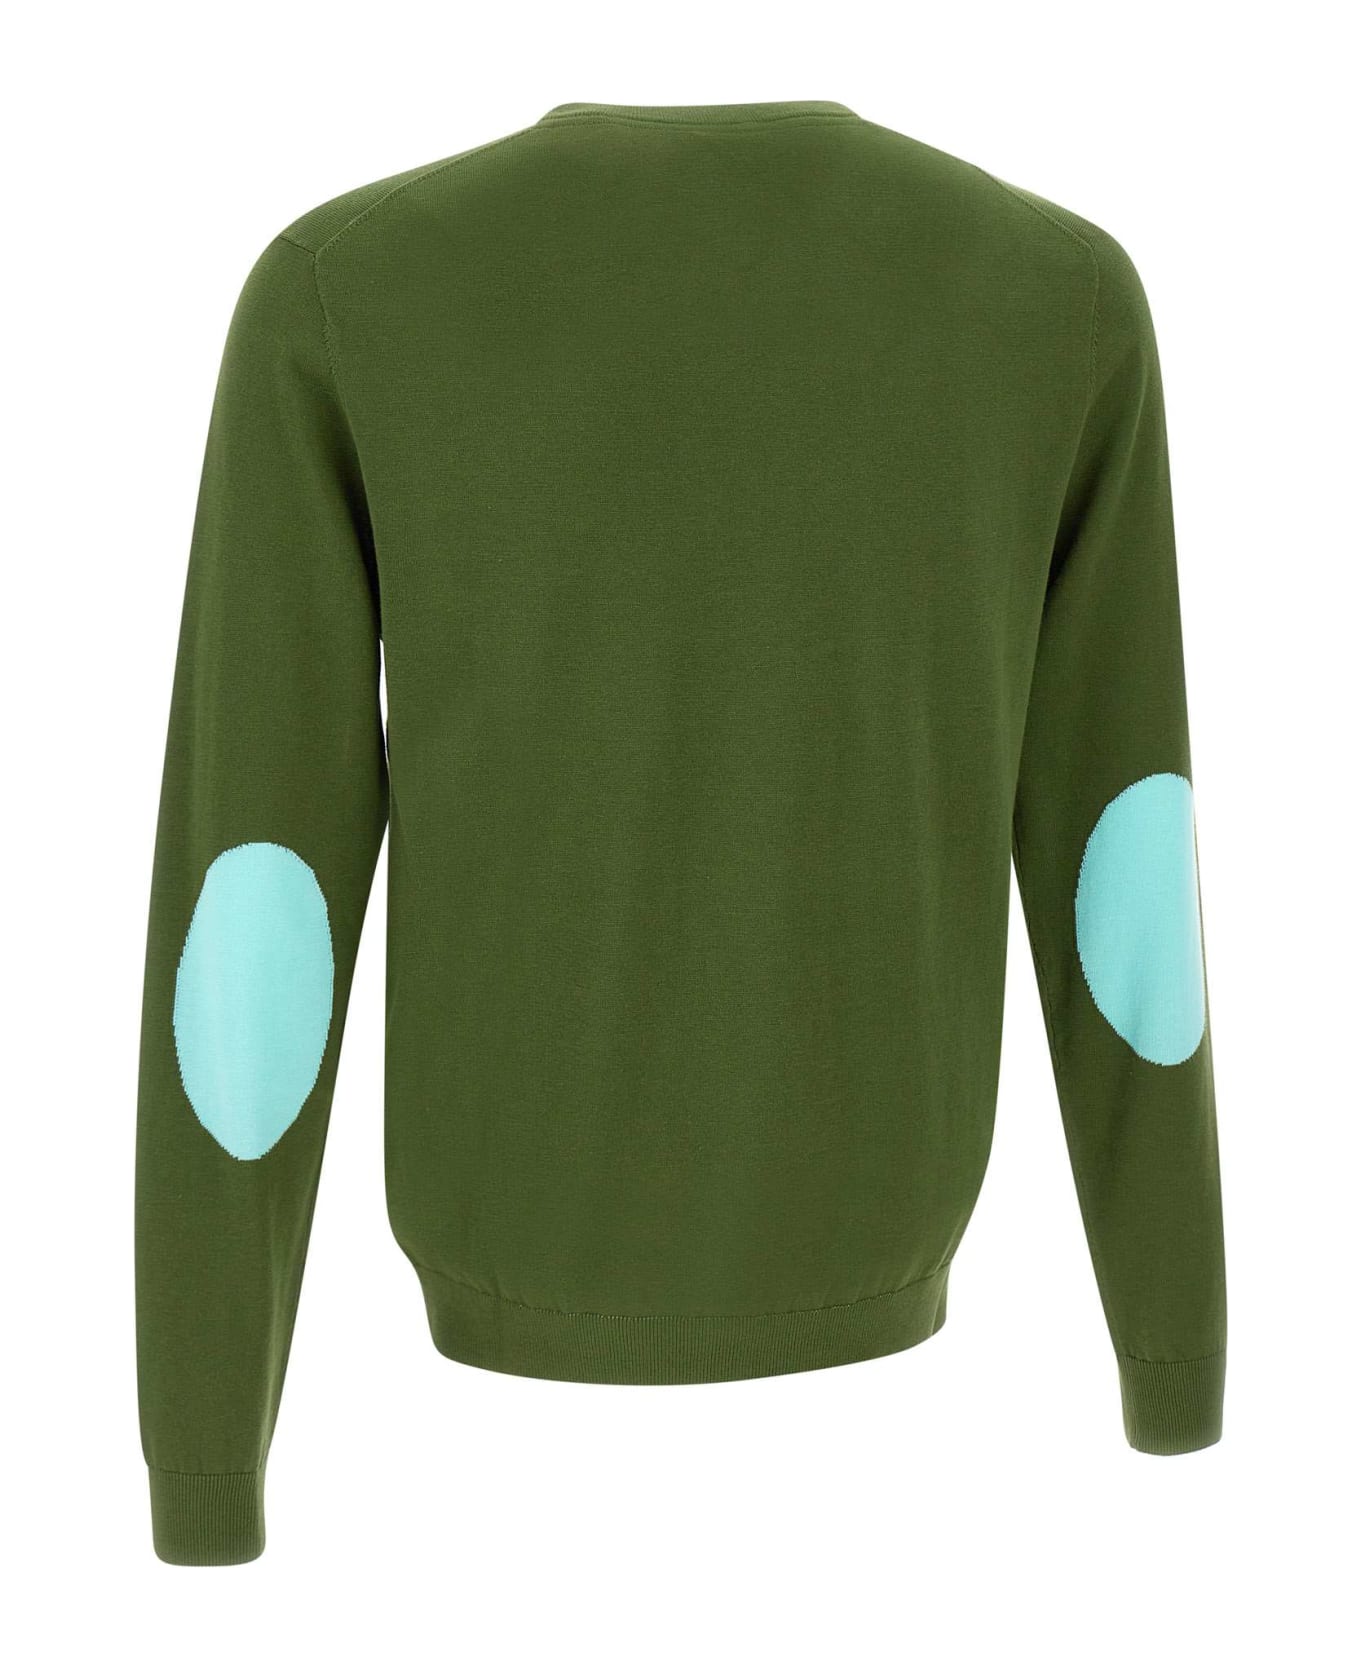 Sun 68 "round Elbow" Cotton Sweater - GREEN ニットウェア